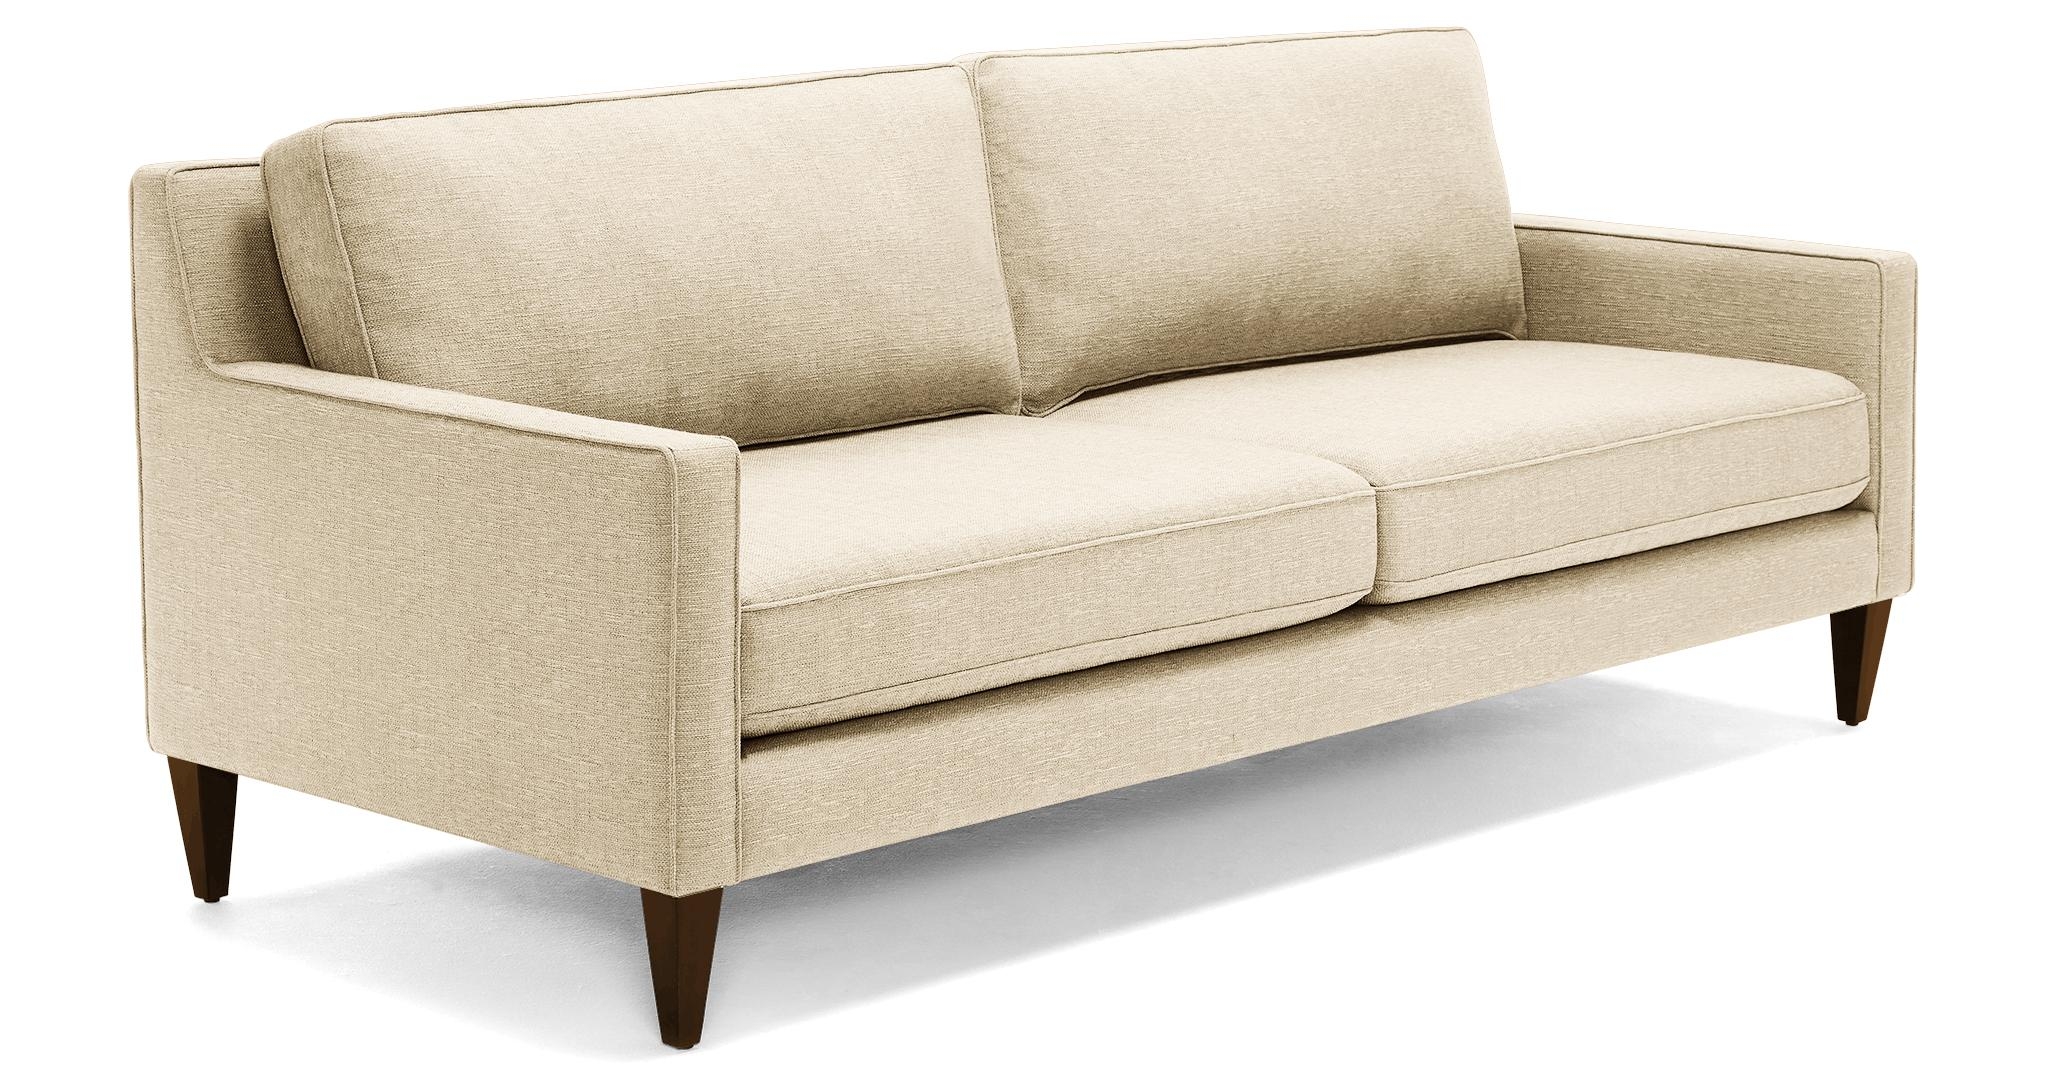 Beige/White Levi Mid Century Modern Sofa - Merit Dove - Mocha - Image 1